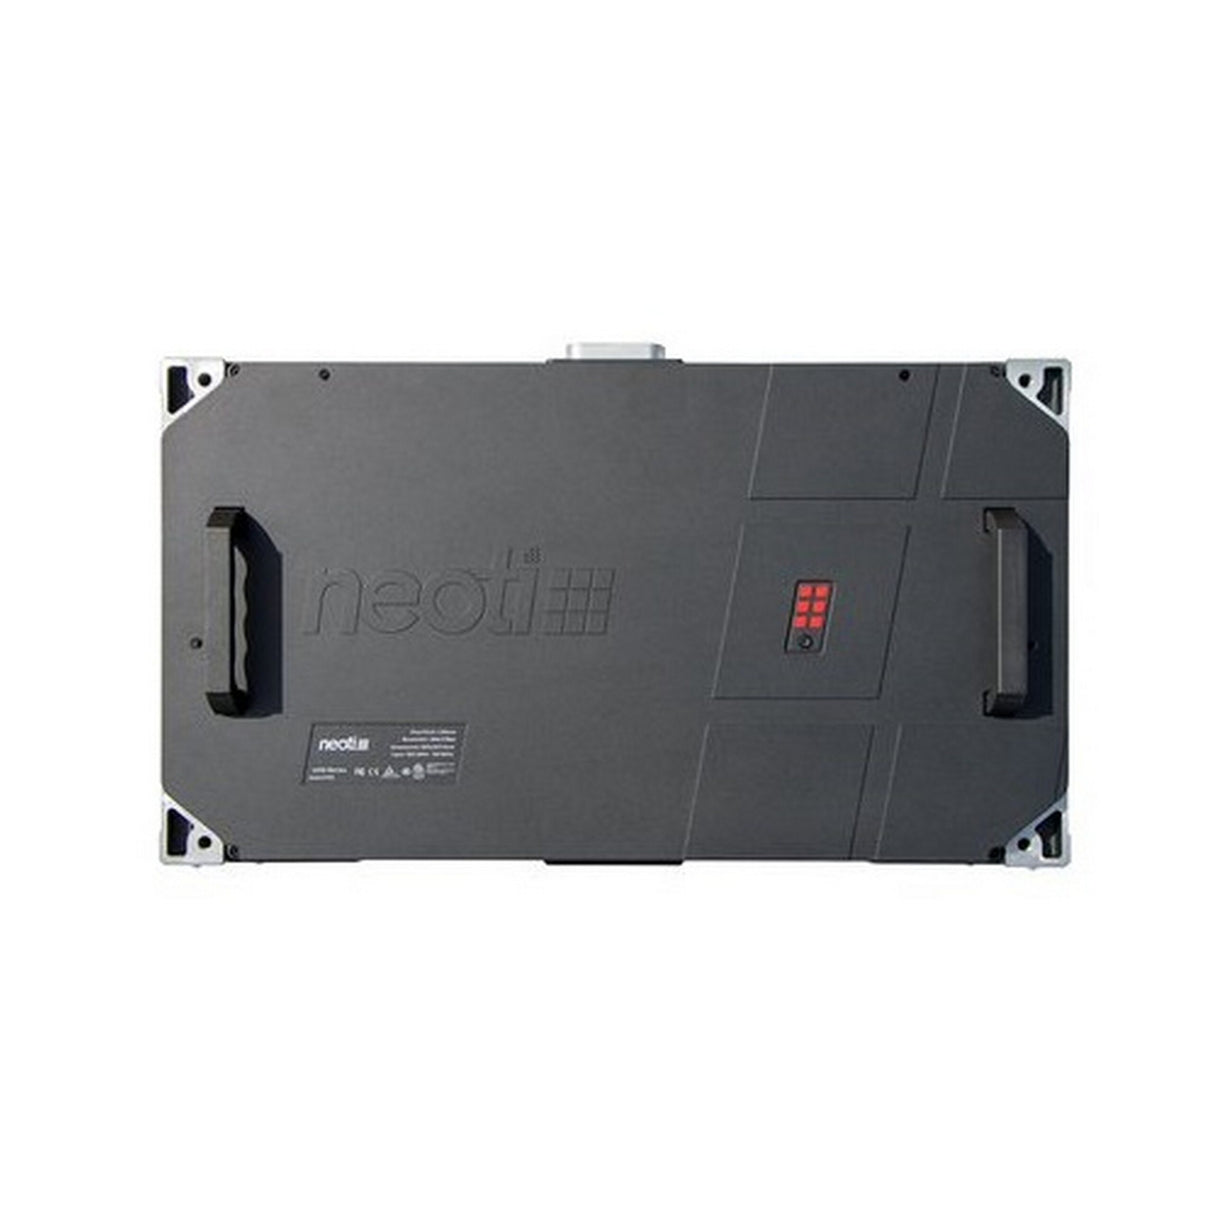 Neoti U25IR600X337 UHD Direct View Indoor LED Panel, 16:9 with Redundant Power and Data